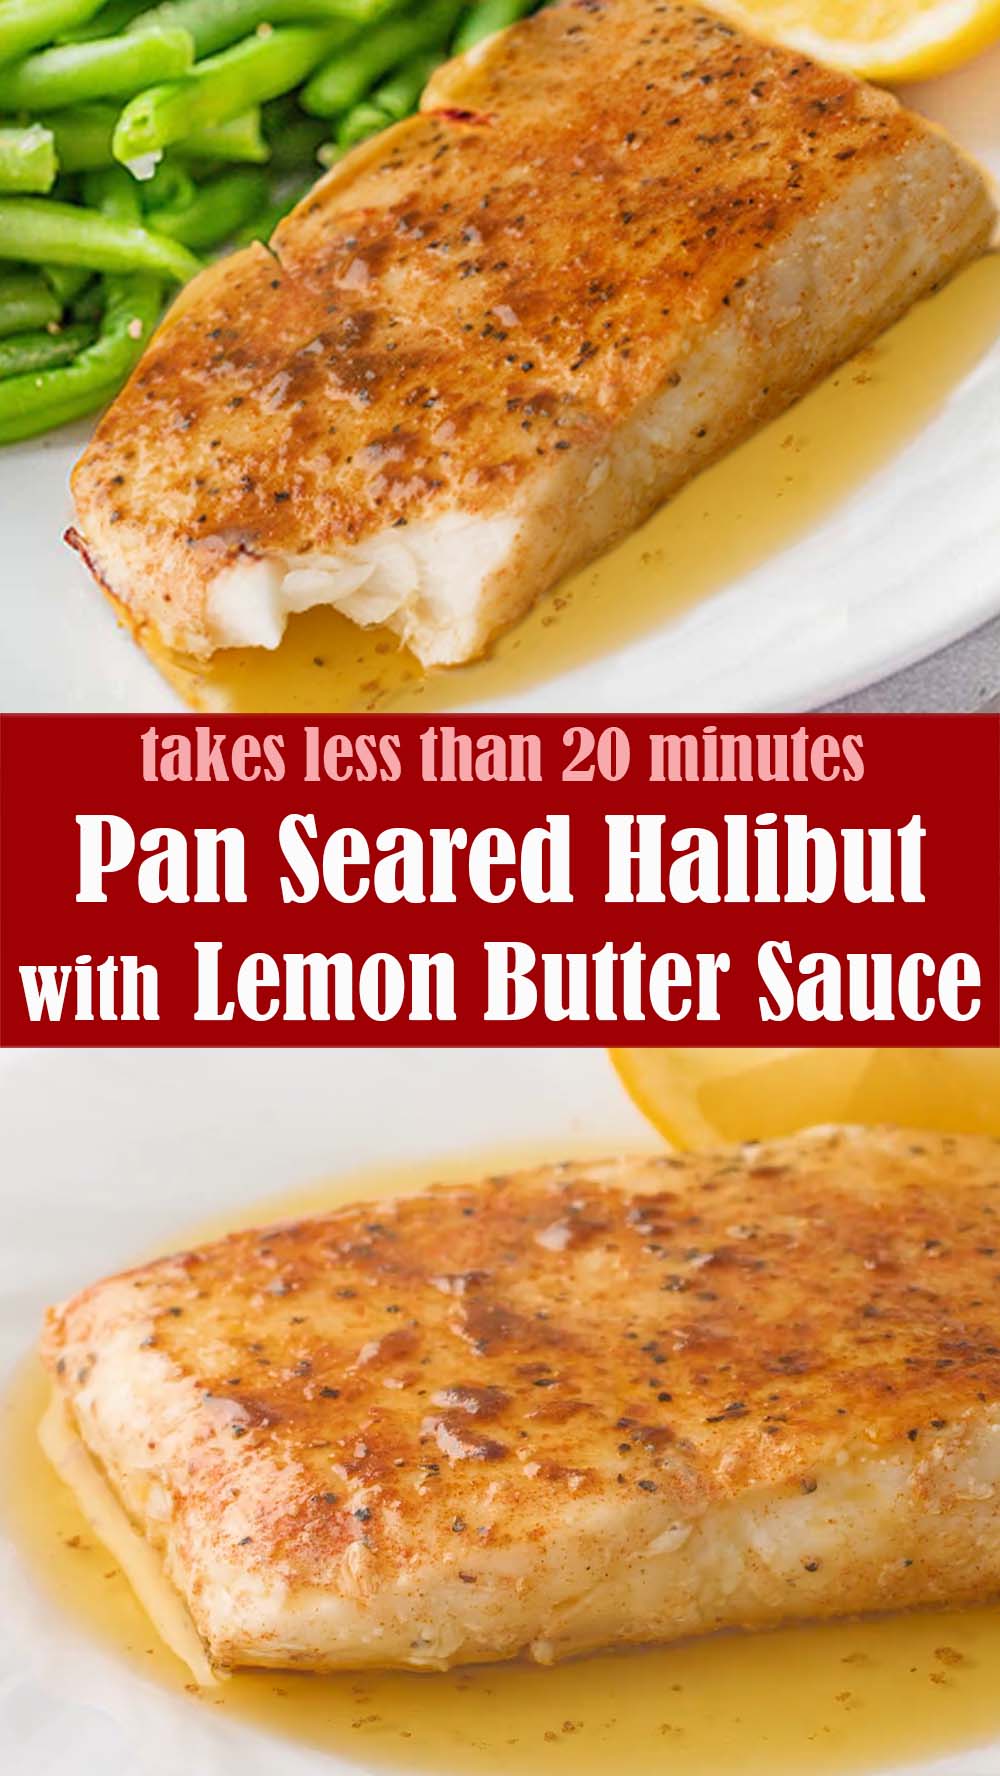 Pan Seared Halibut with Lemon Butter Sauce